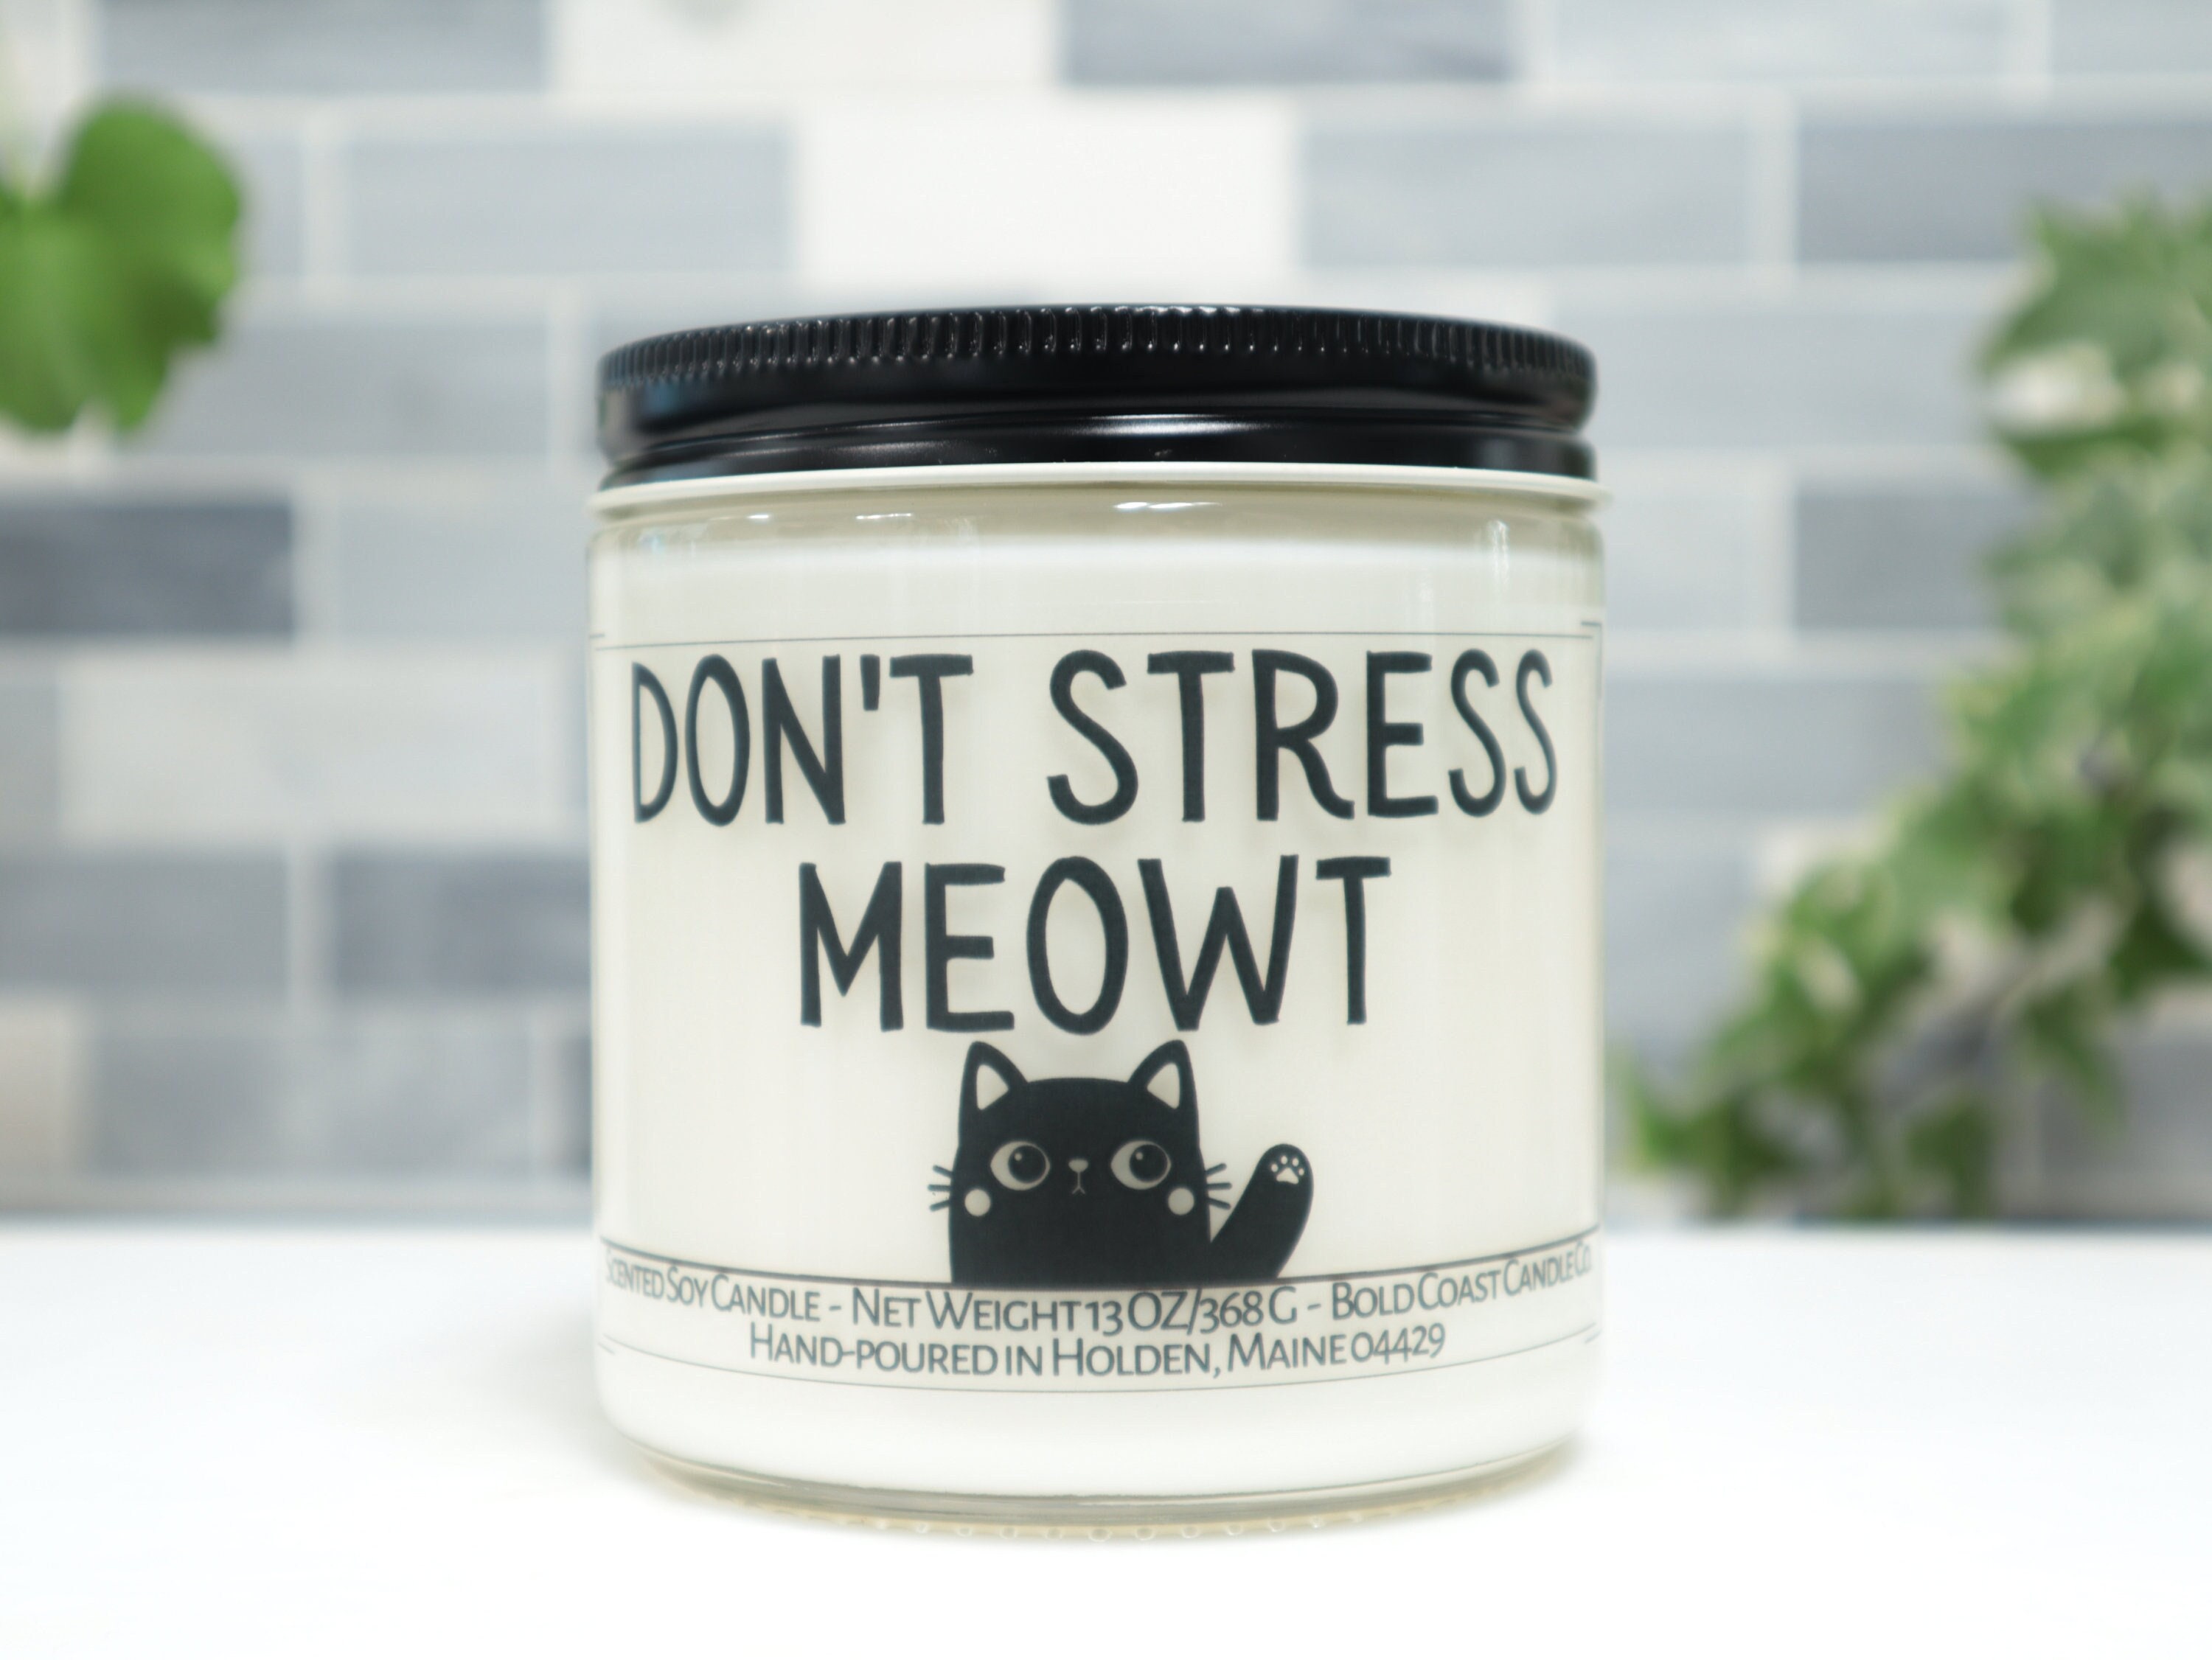 Don't Stress Meowt